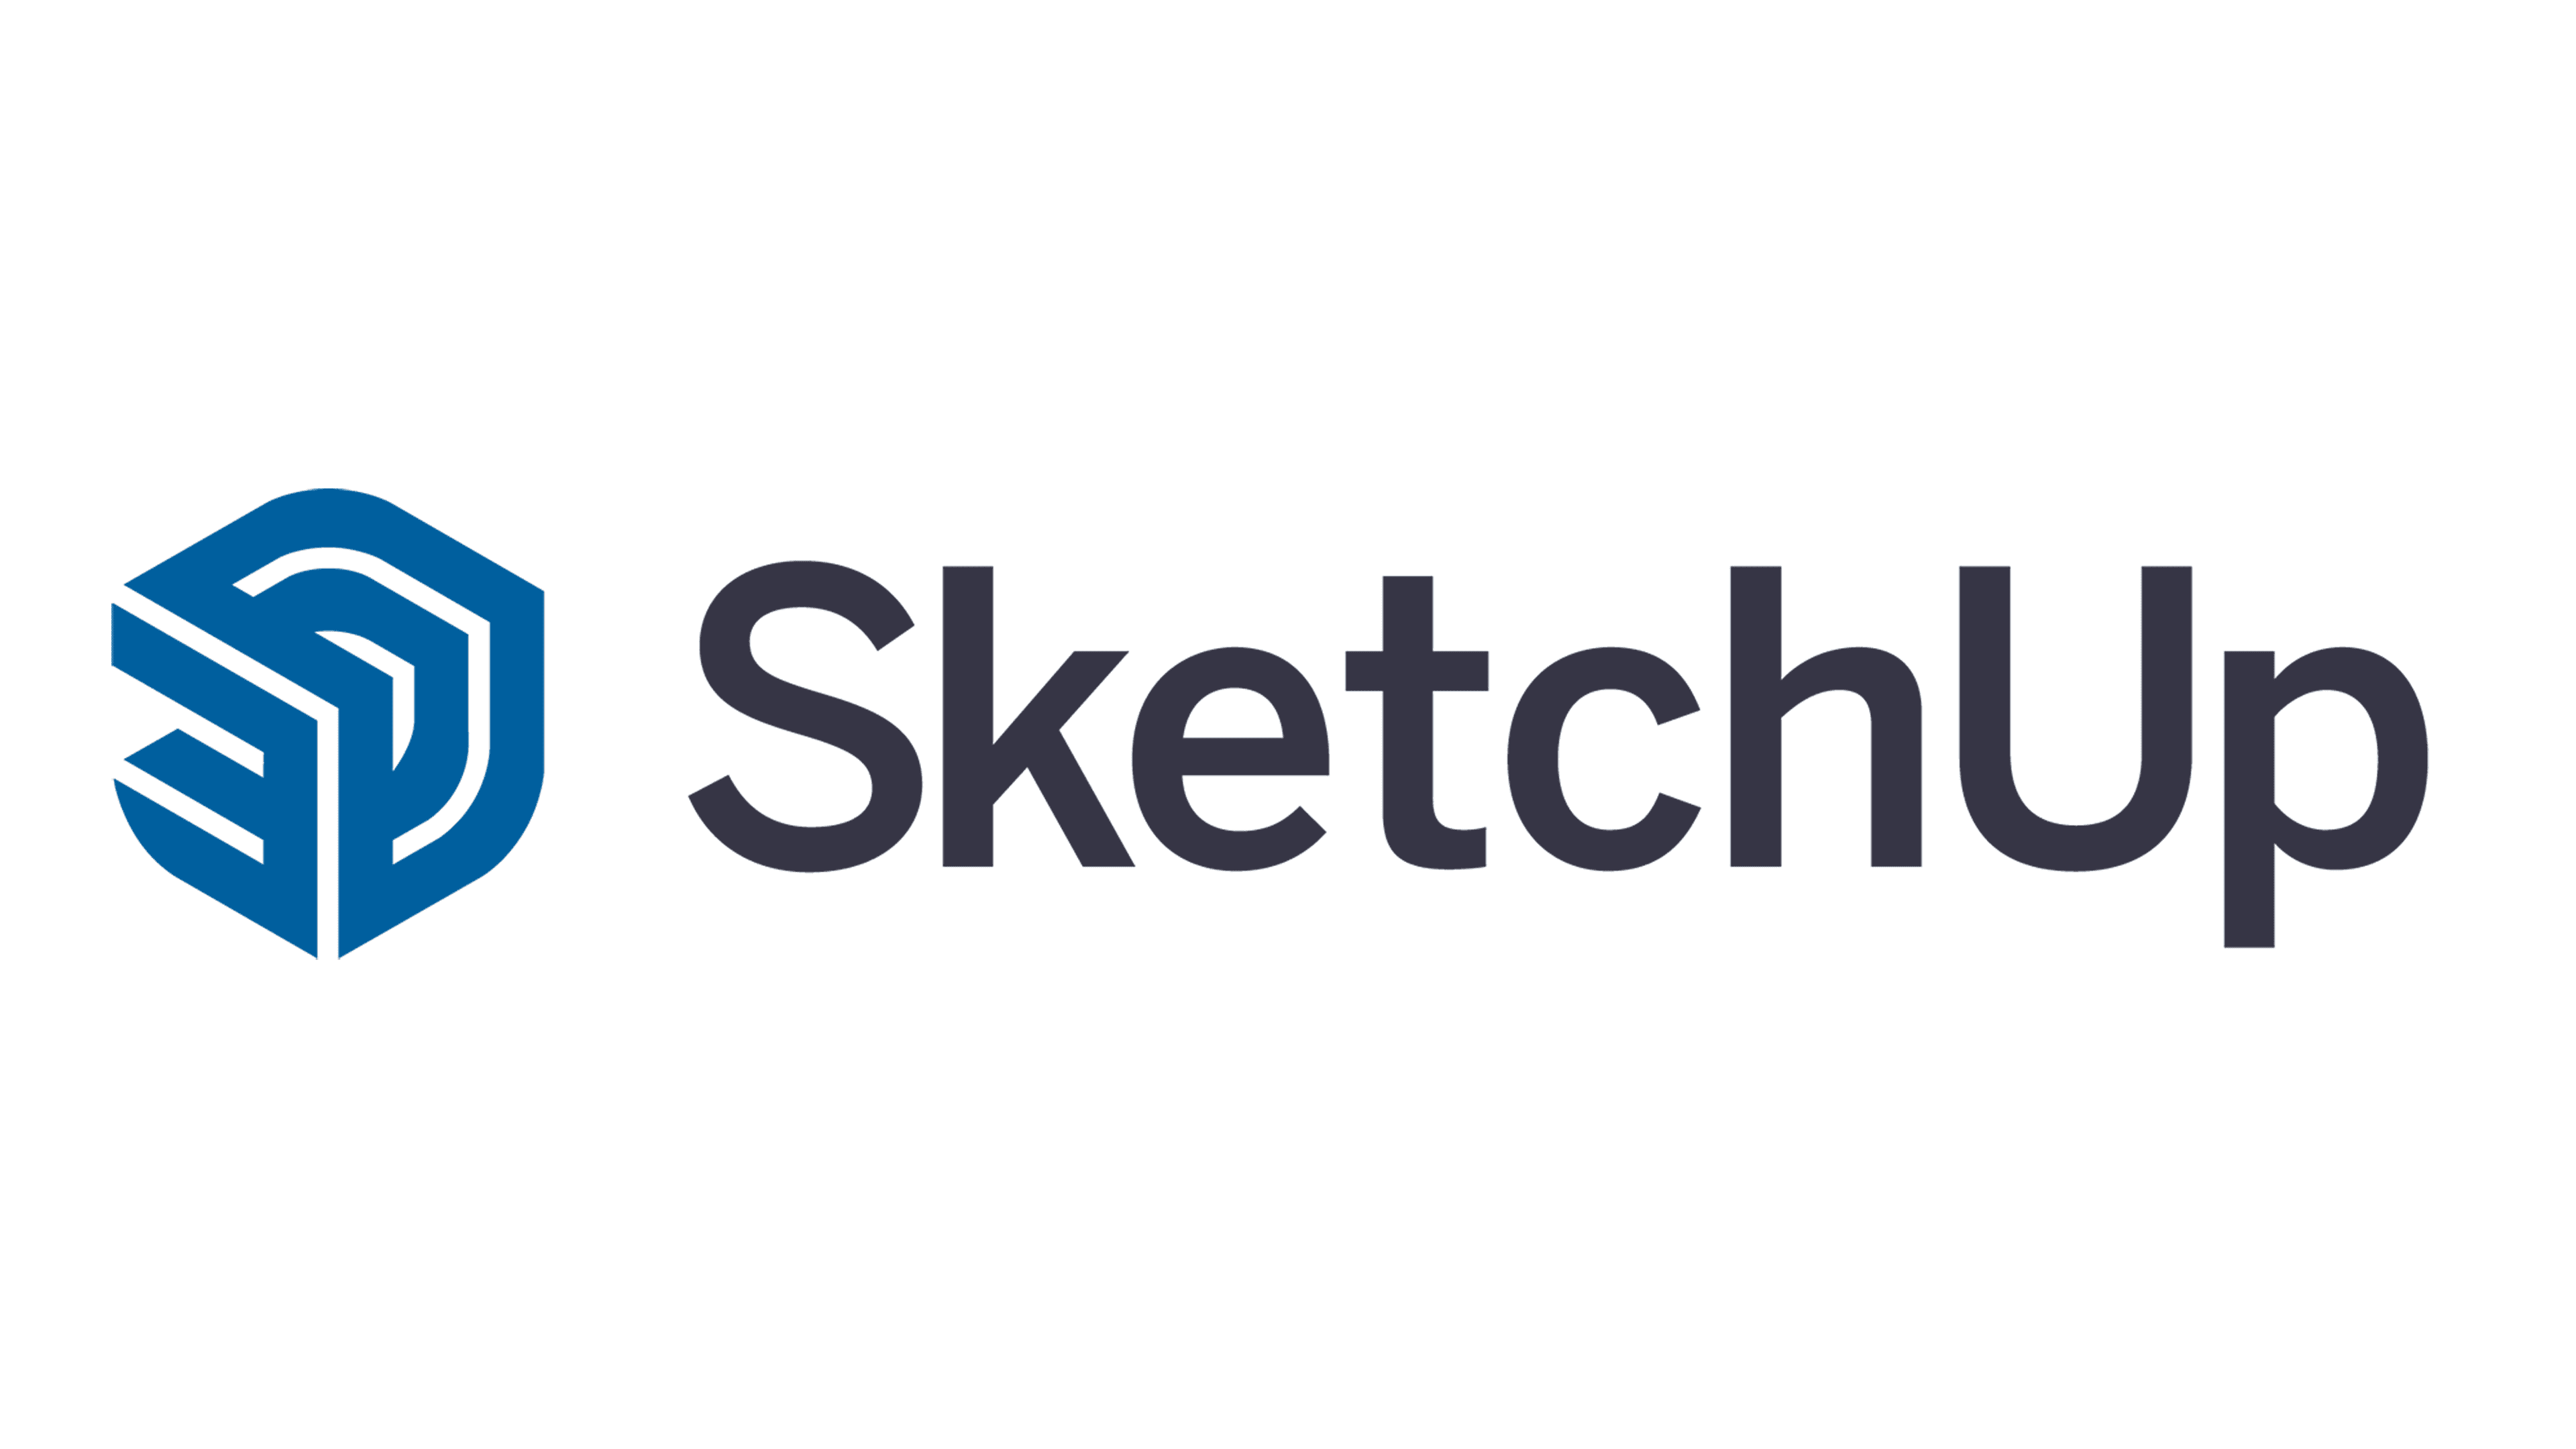 SketchUp online training with Pinnacle Series